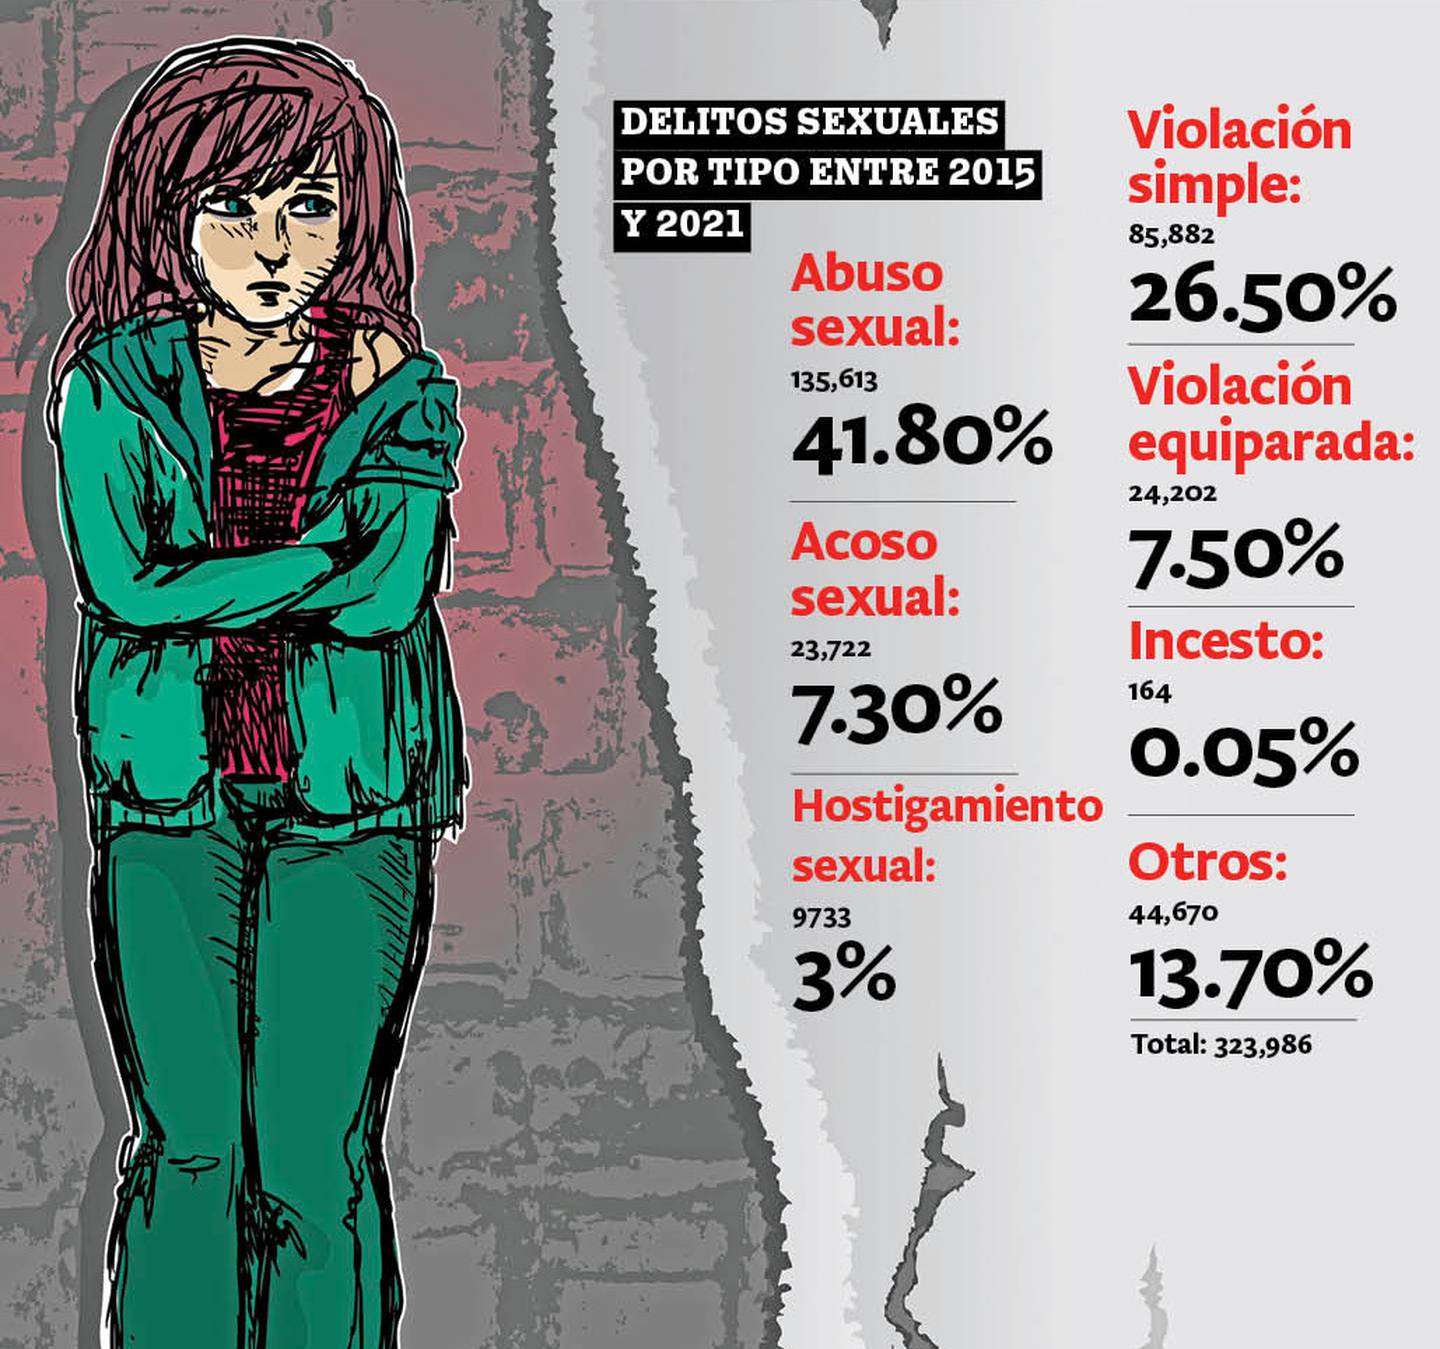 Denuncias por delitos sexuales en México, acelerados e imparables